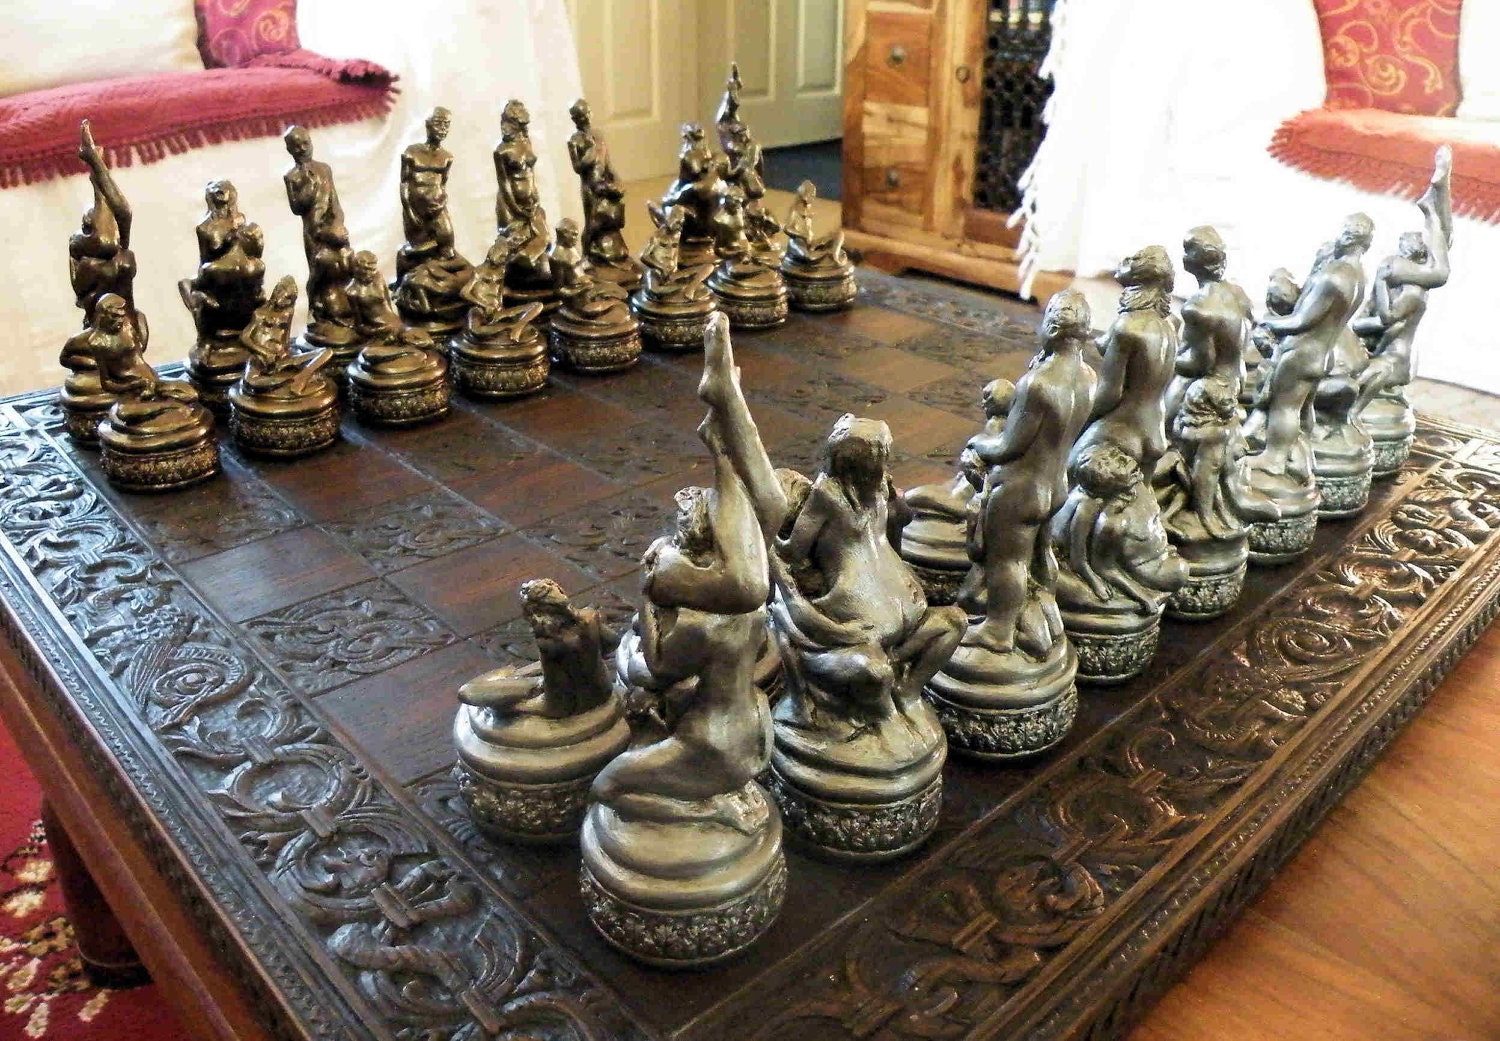 Large Adult Erotic Chess Set Ornate Base Bronze Vs Silver | Free Hot ...